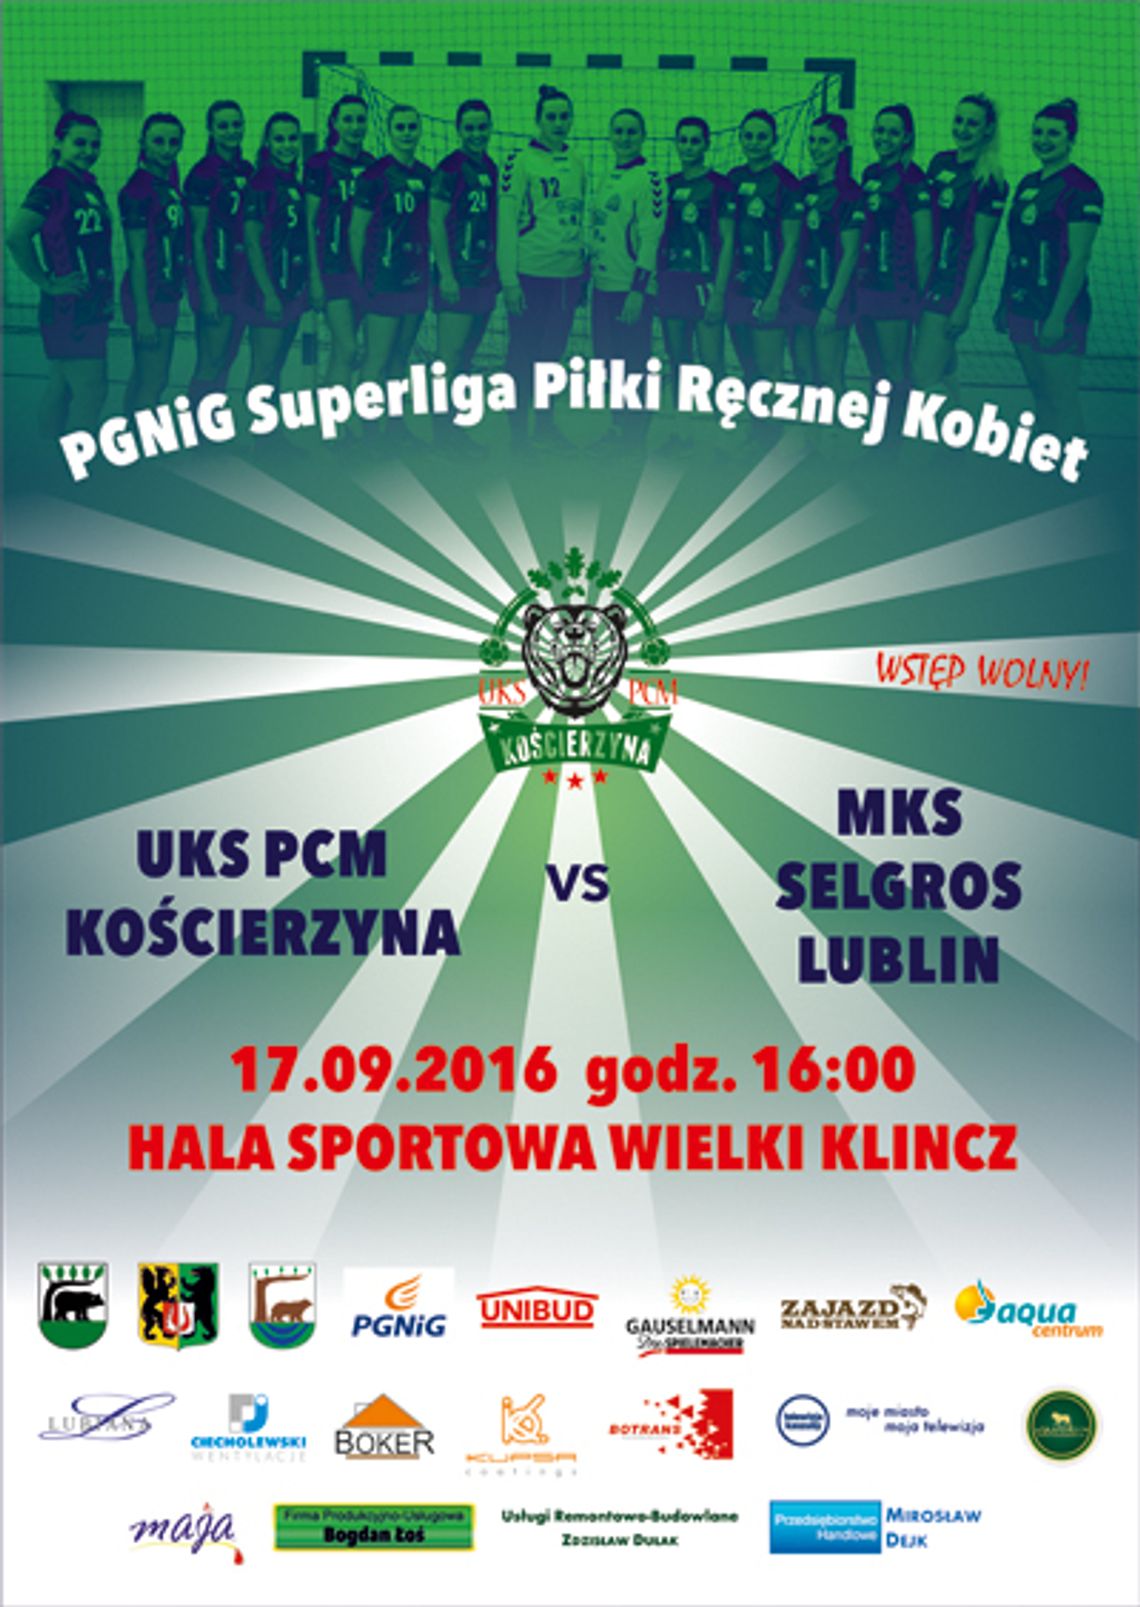 UKS PCM Kościerzyna vs MKS Selgros Lublin